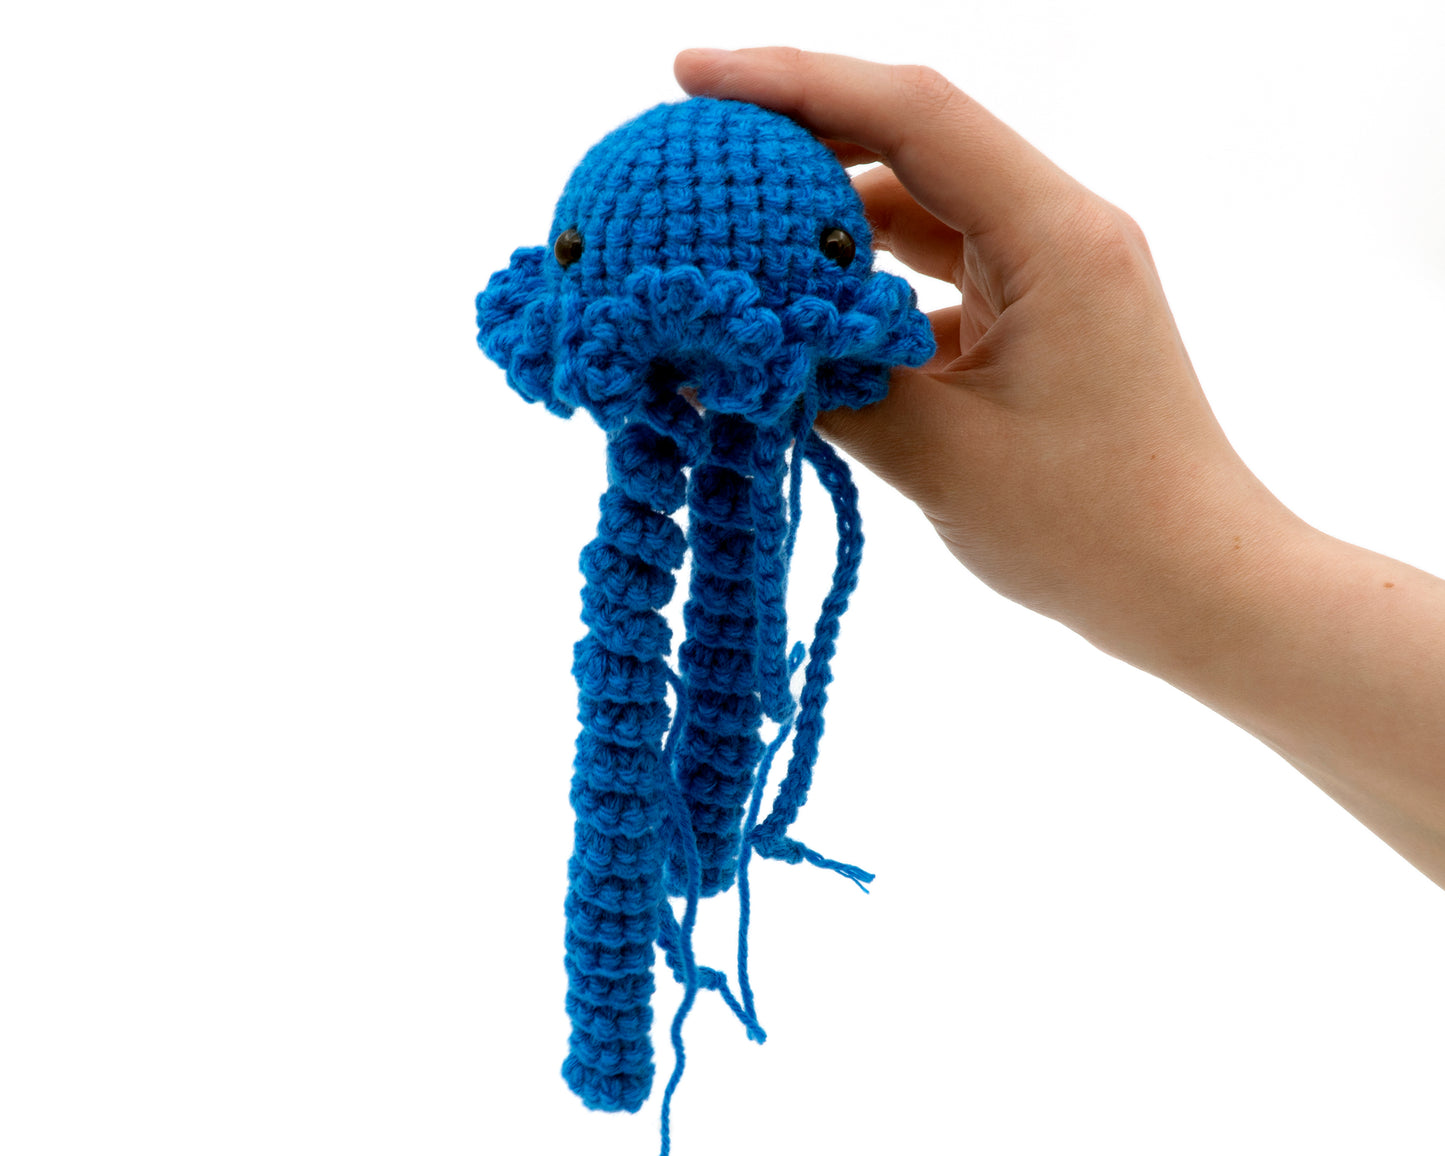 amigurumi crochet jellyfish pattern in hand for size comparison